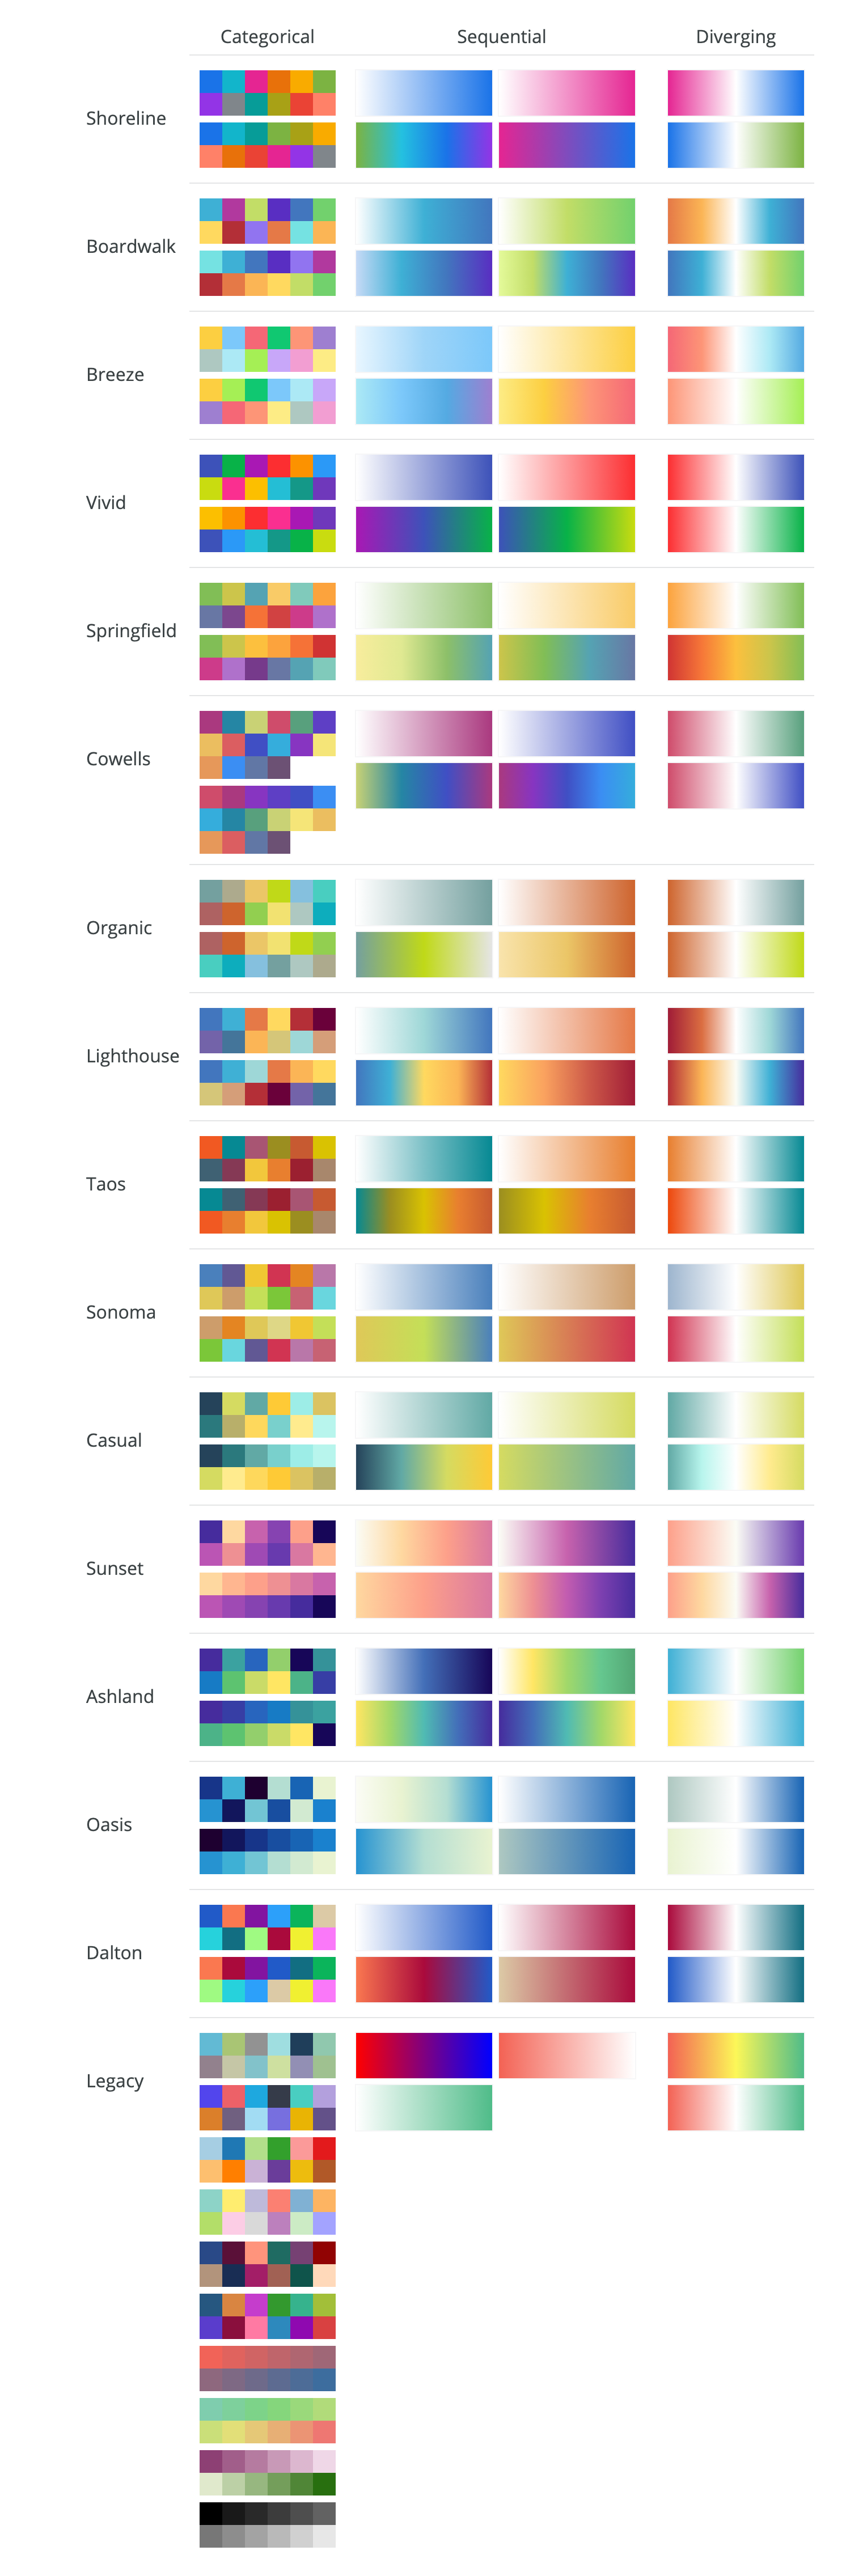 Muted color palette - Google Drive Community